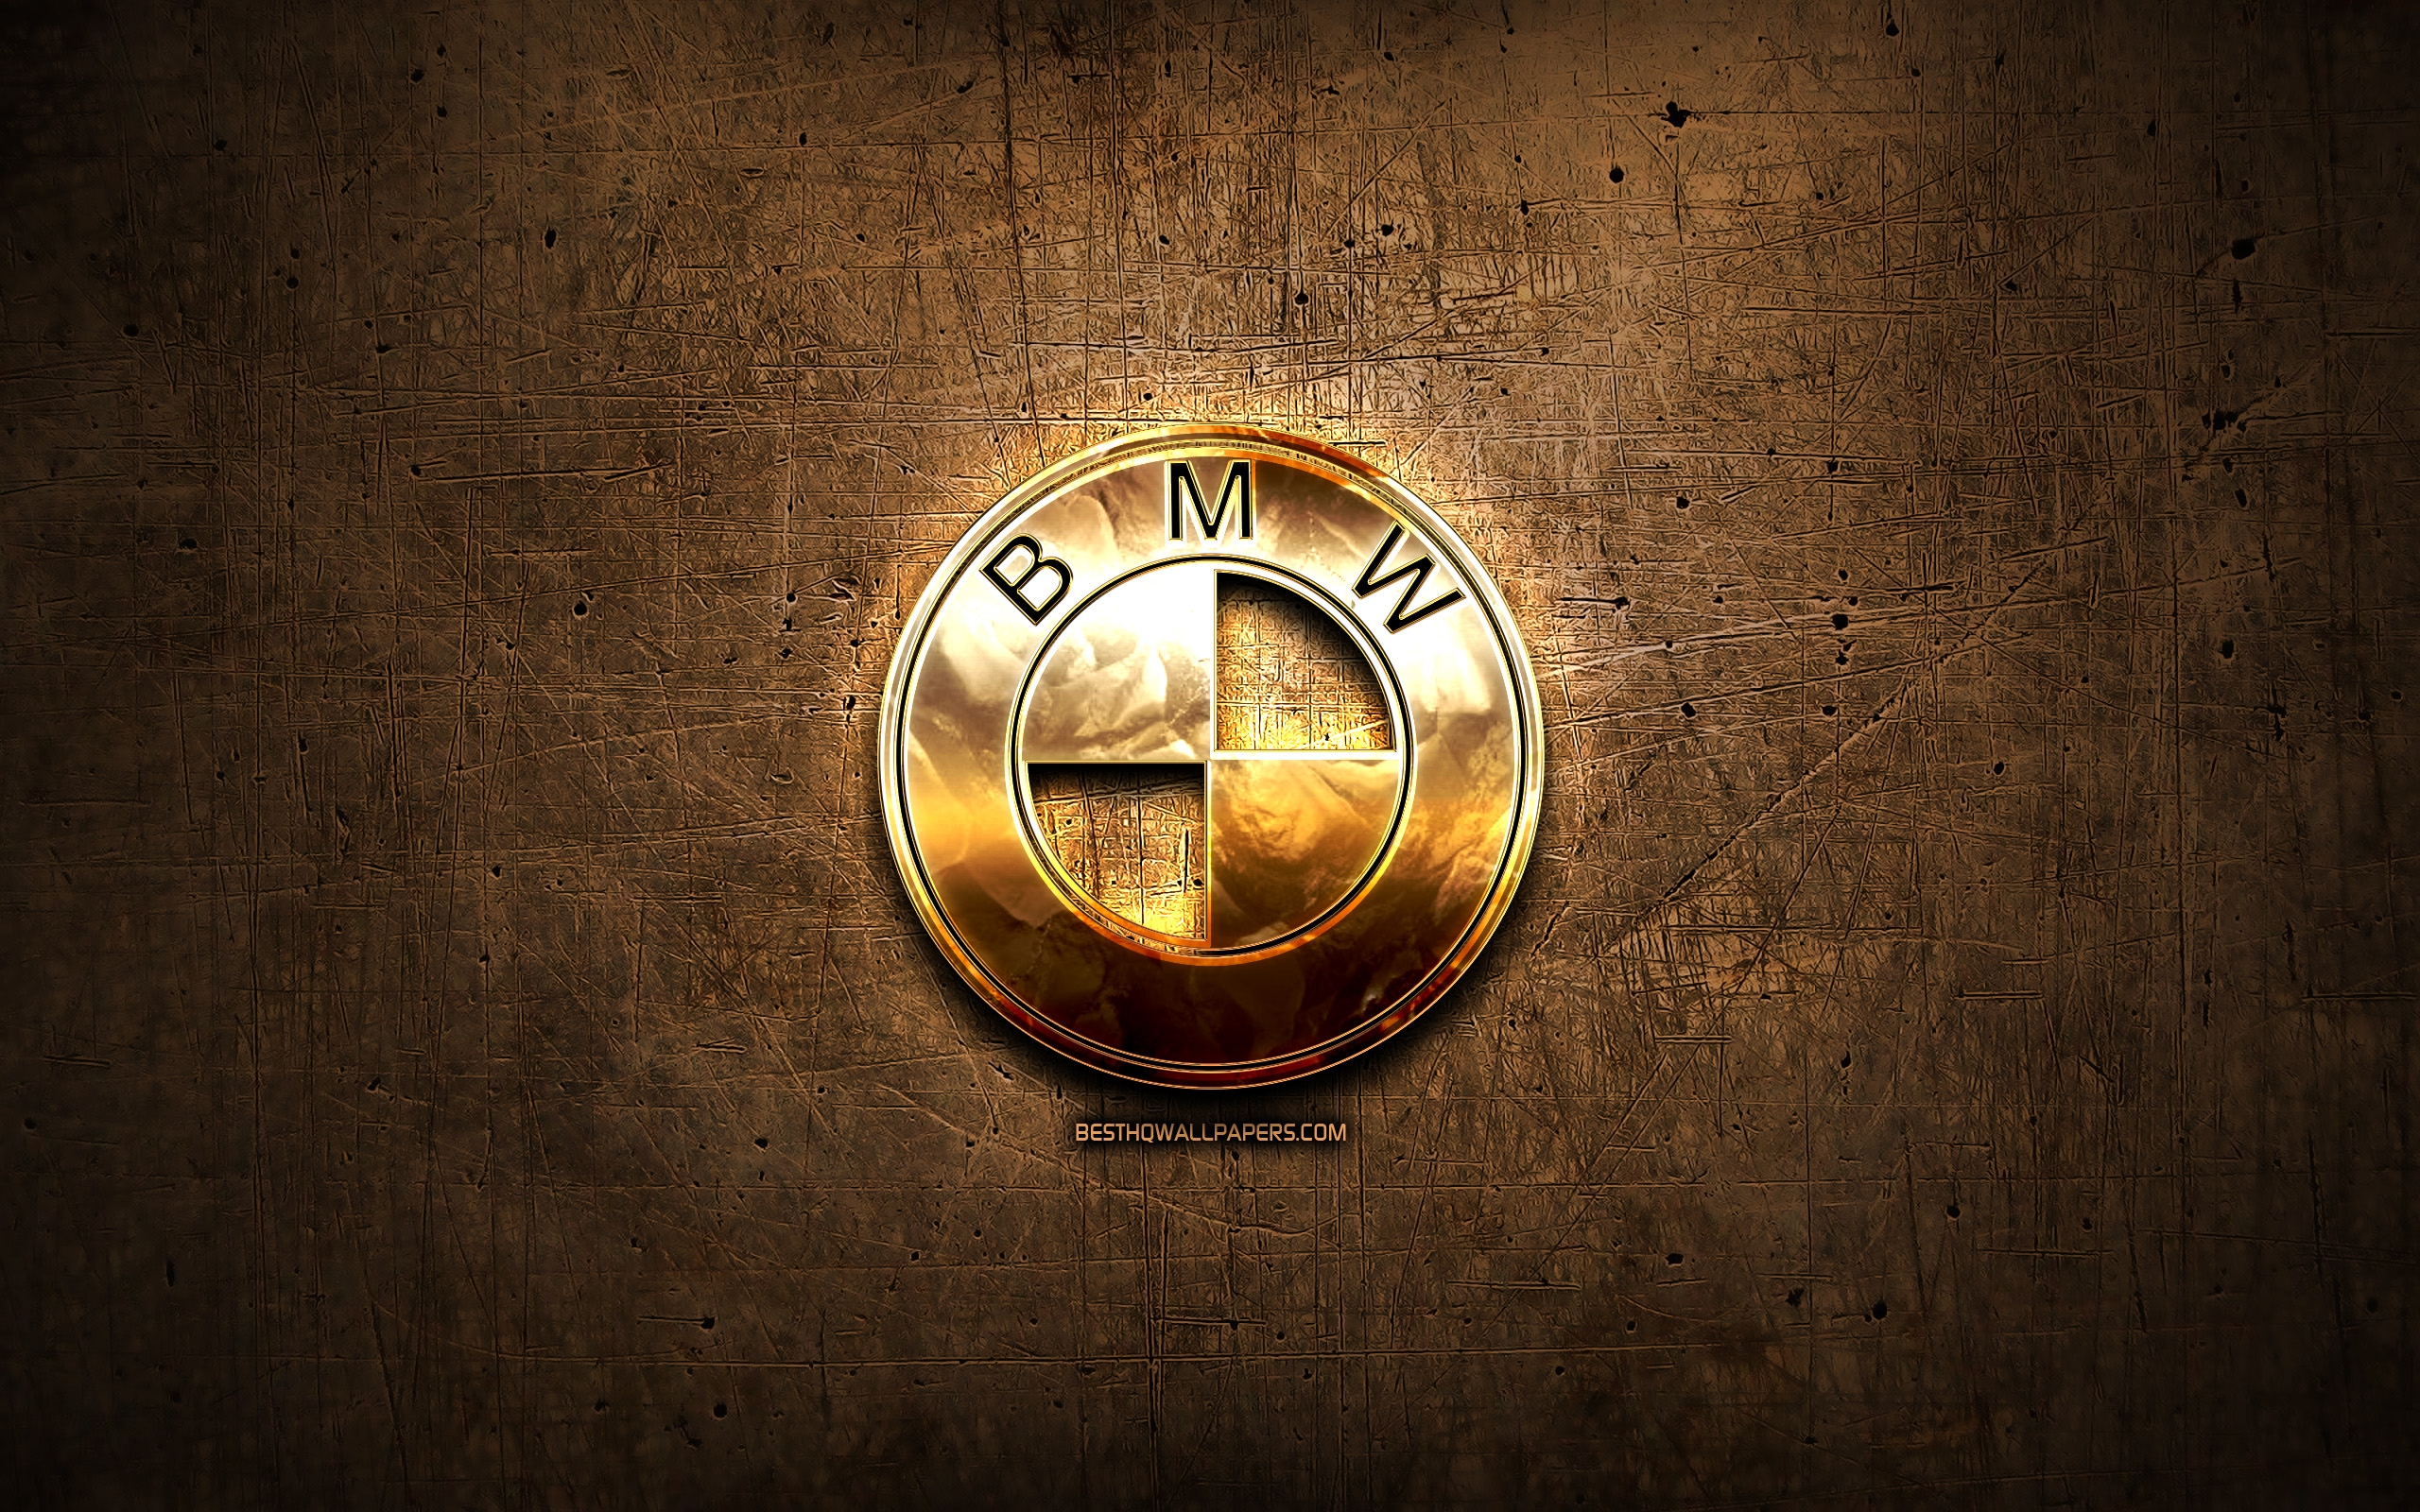 Bmw Golden Logo Cars Brands Artwork Brown Metal